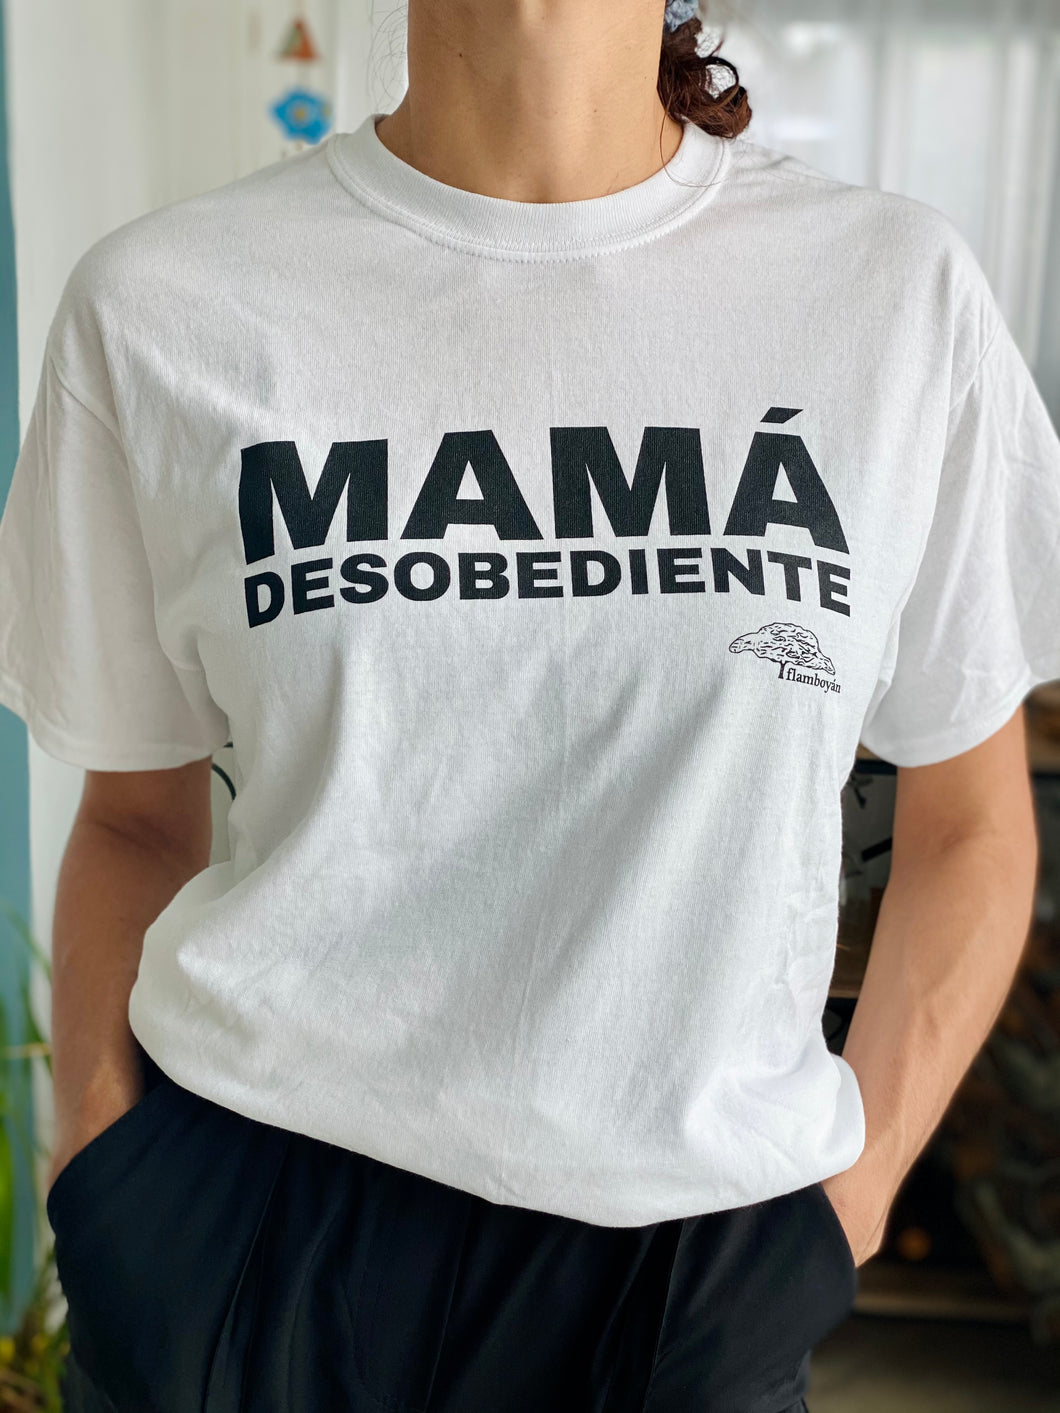 T-shirt: Mamá desobediente